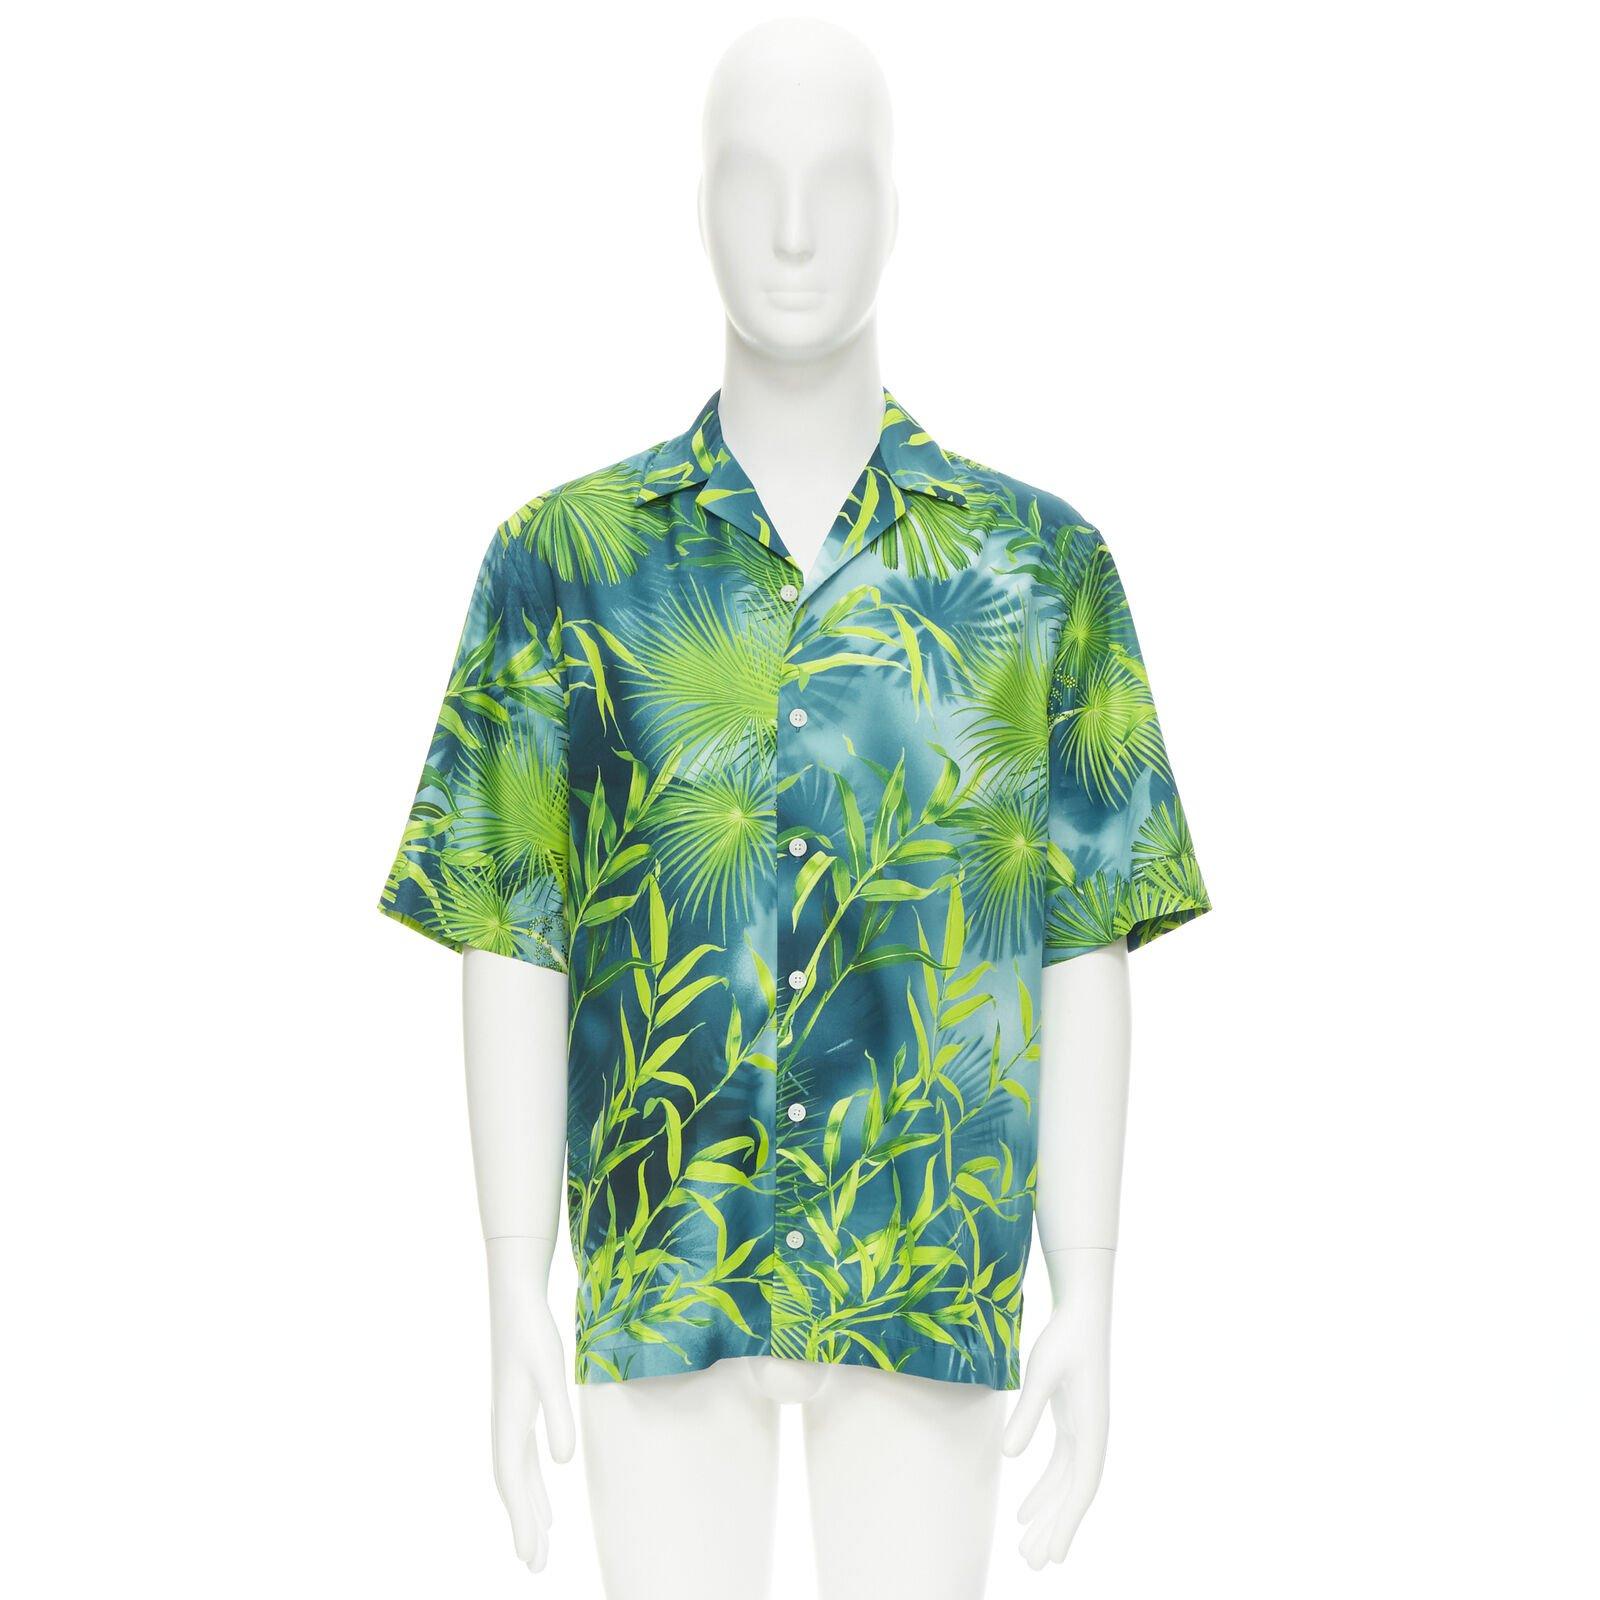 VERSACE 2020 Iconic JLo Jungle print green tropical print shirt EU41 XL 6